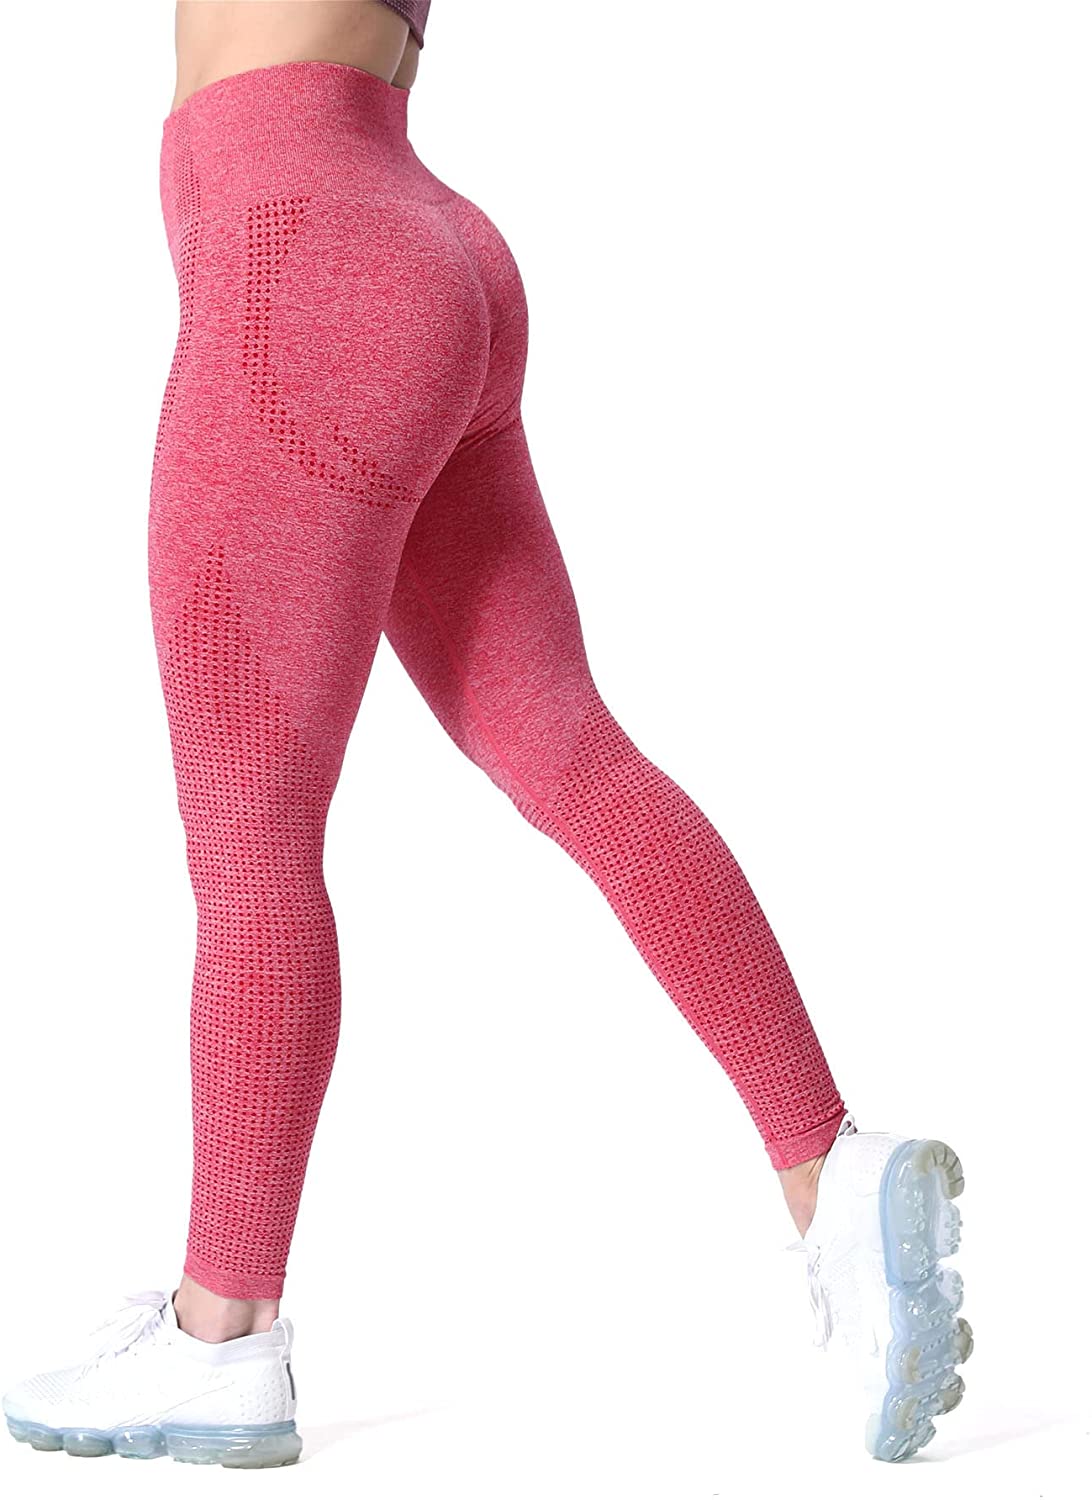 Aoxjox Women's High Waist Workout Gym Vital Seamless Leggings Yoga Pants  (Khaki Marl, Medium), Khaki, Medium 